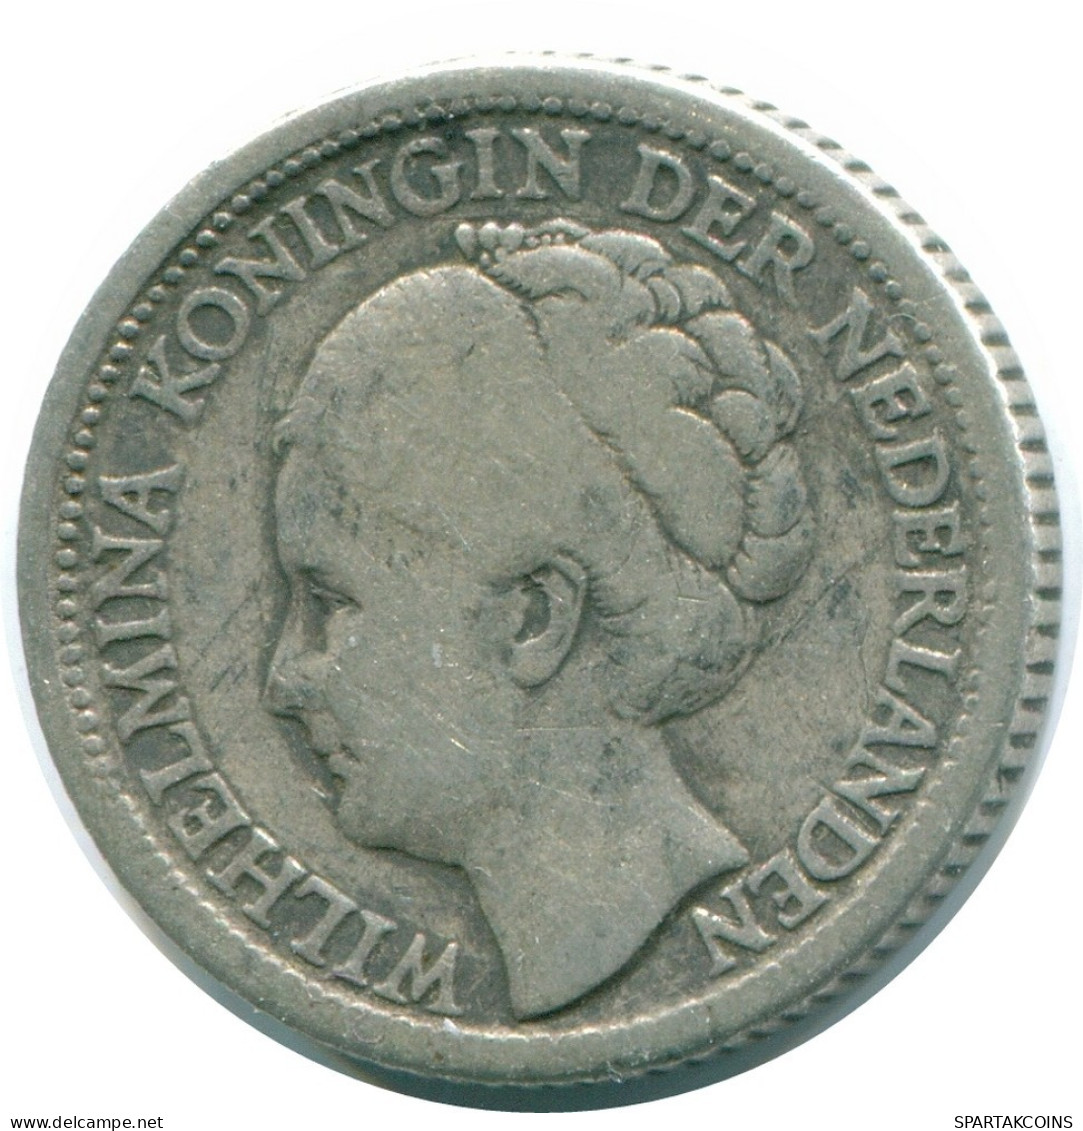 1/4 GULDEN 1944 CURACAO Netherlands SILVER Colonial Coin #NL10719.4.U.A - Curacao